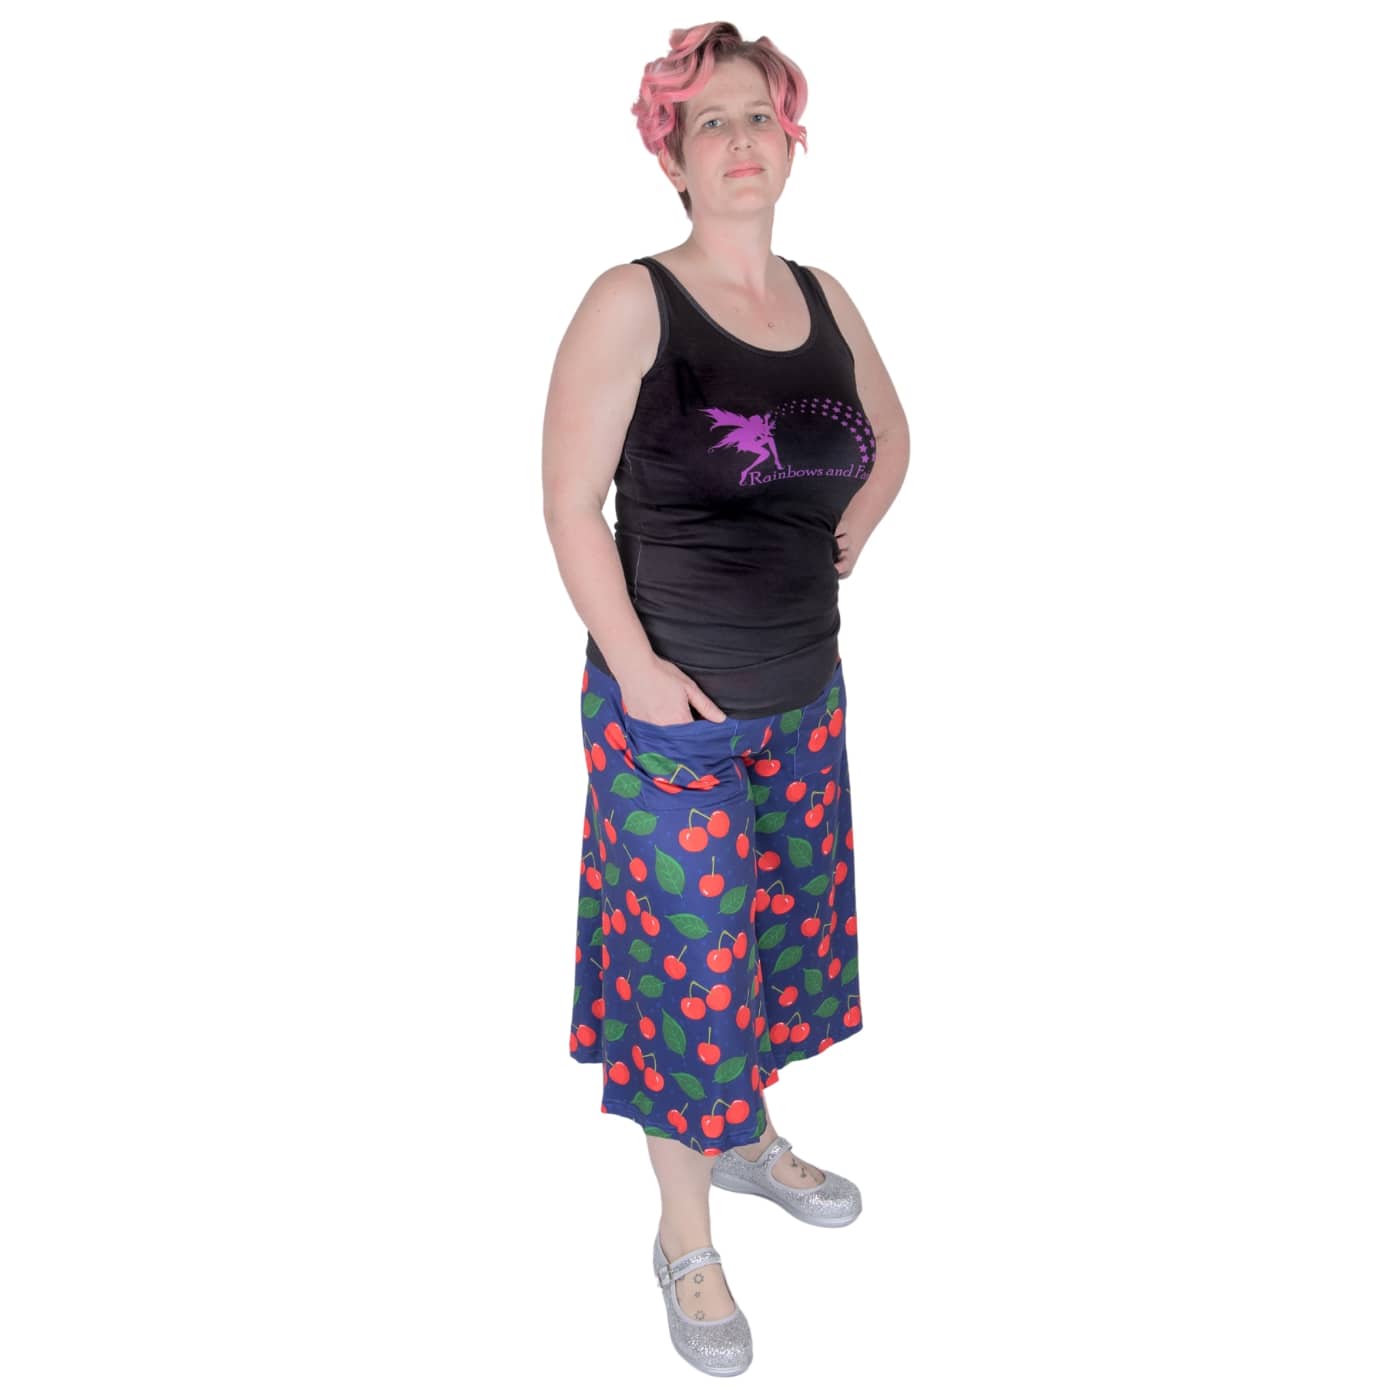 Cherry Culottes by RainbowsAndFairies.com.au (Cherries - Cherry Print - Rockabilly - 3 Quarter Pants - Wide Leg Pants - Kitsch - Vintage Inspired) - SKU: CL_CULTS_CHERR_ORG - Pic-05